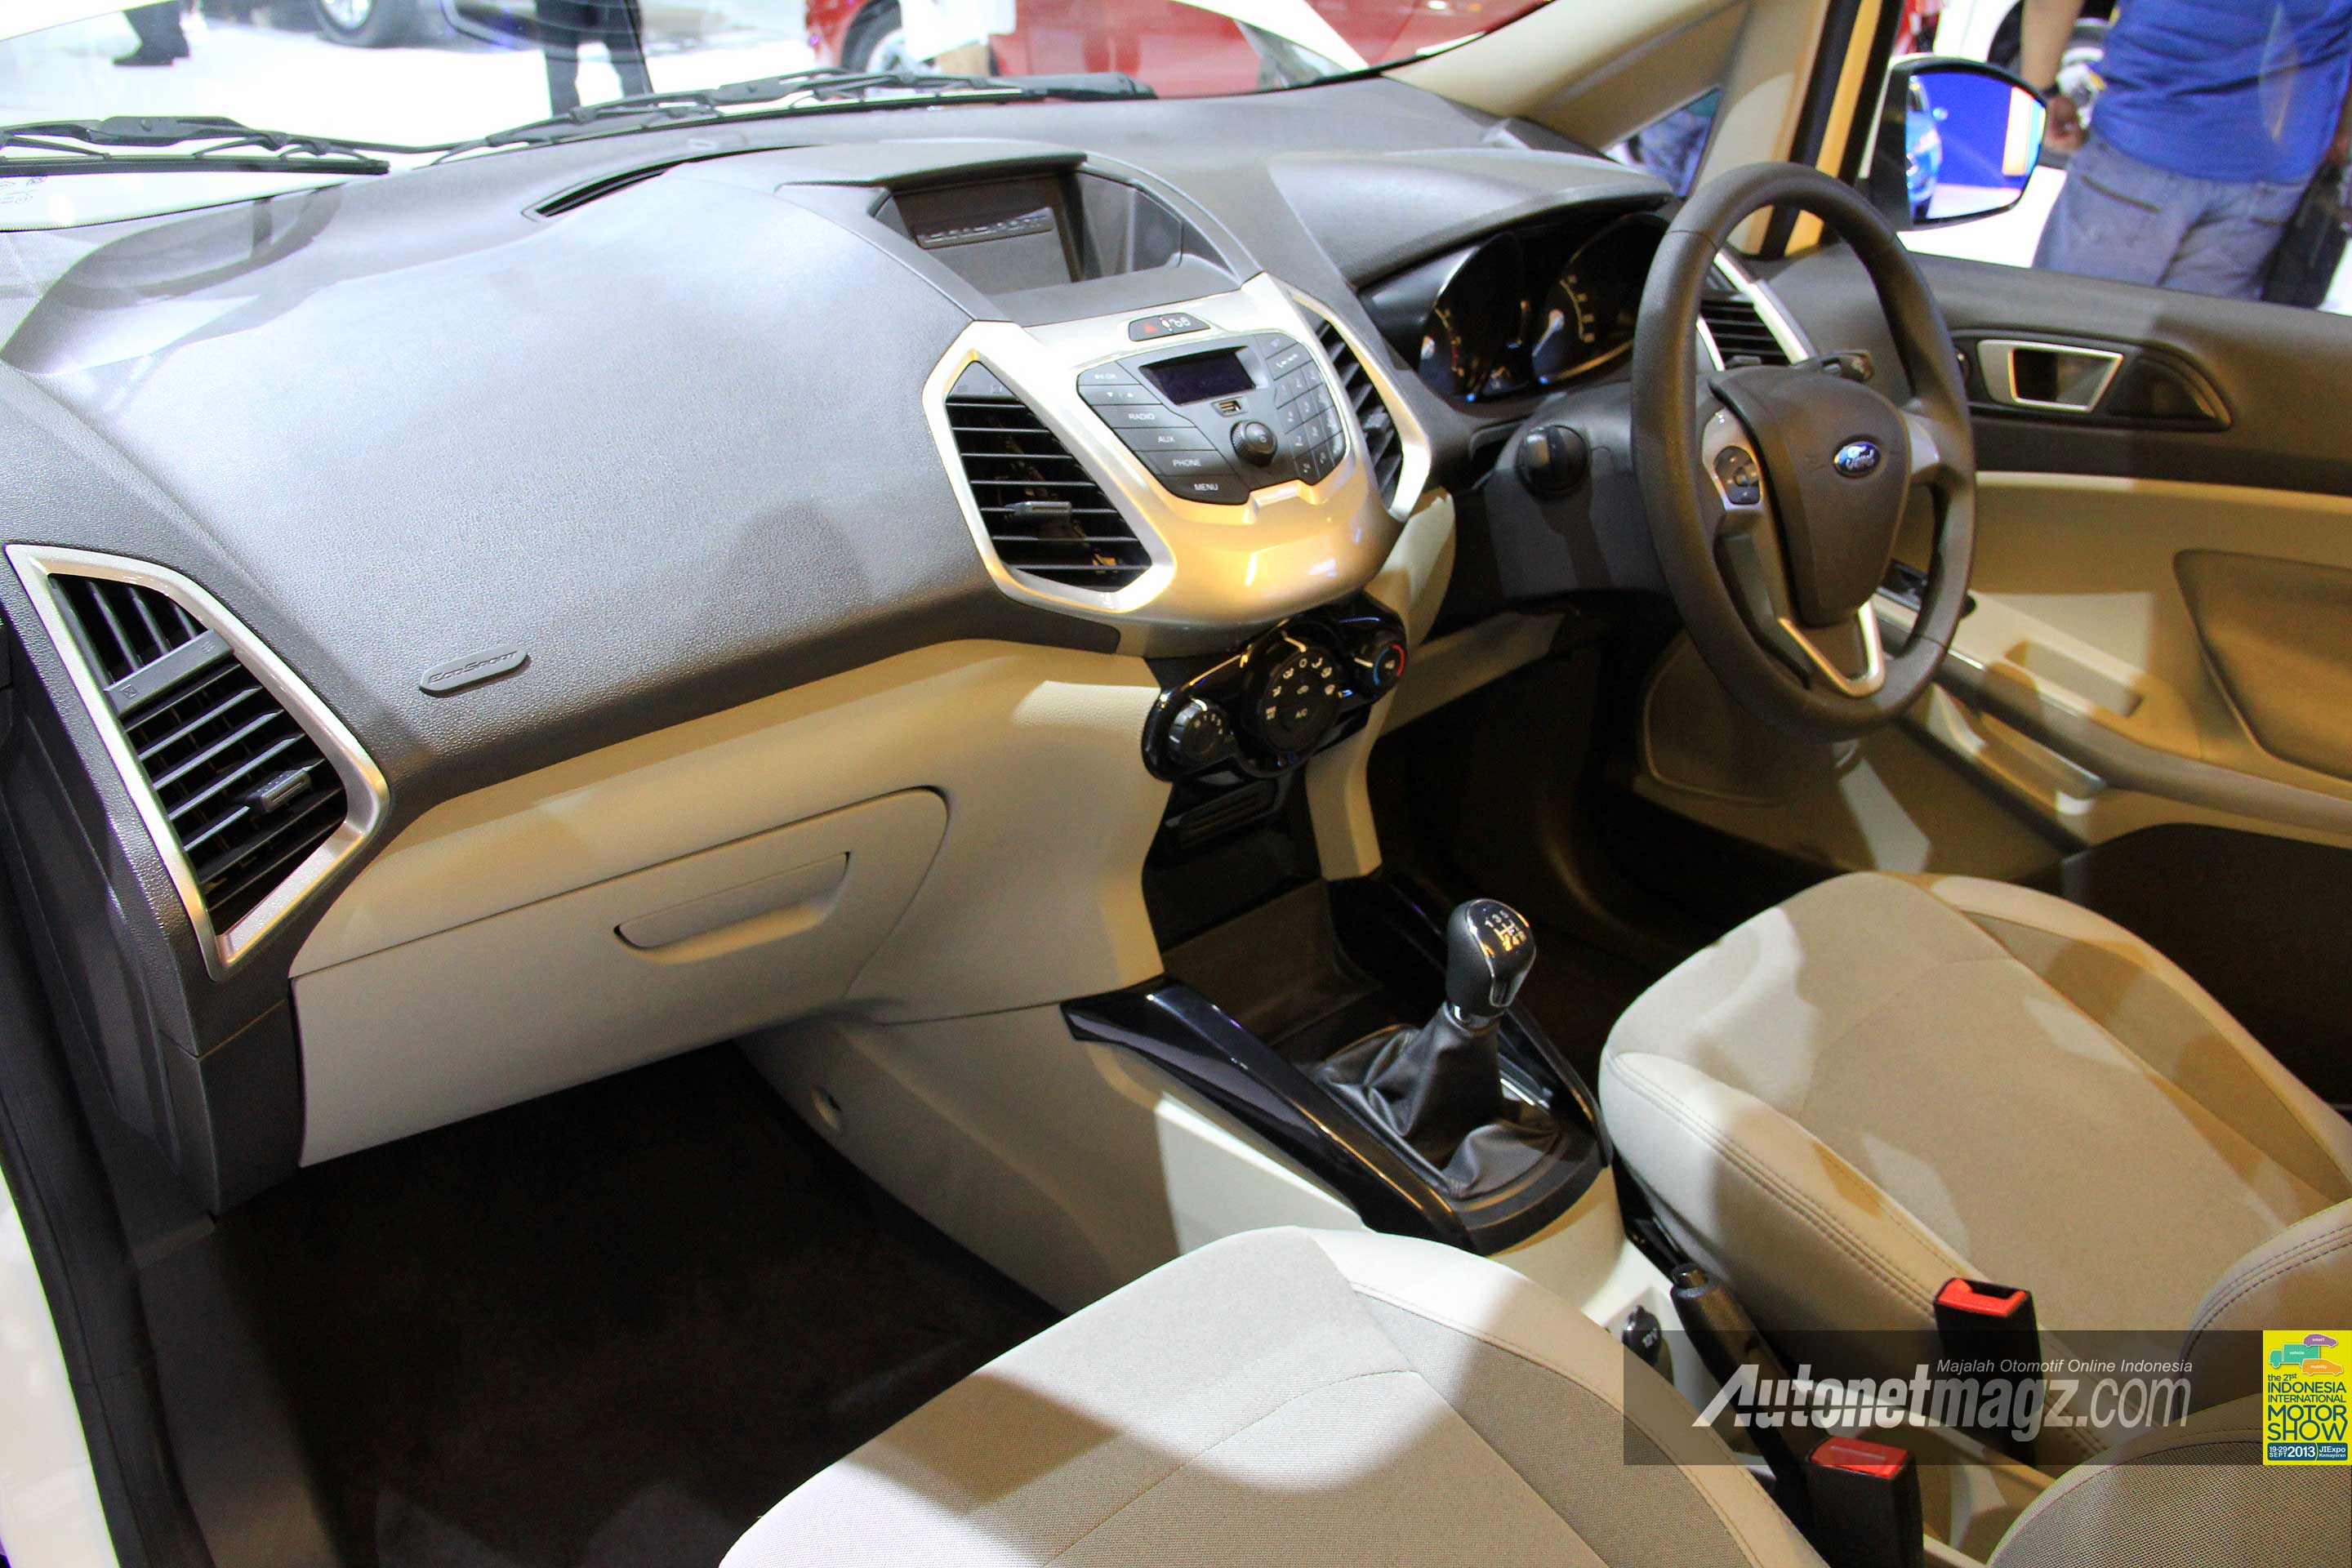  Interior  Ford  EcoSport  Indonesia AutonetMagz Review 